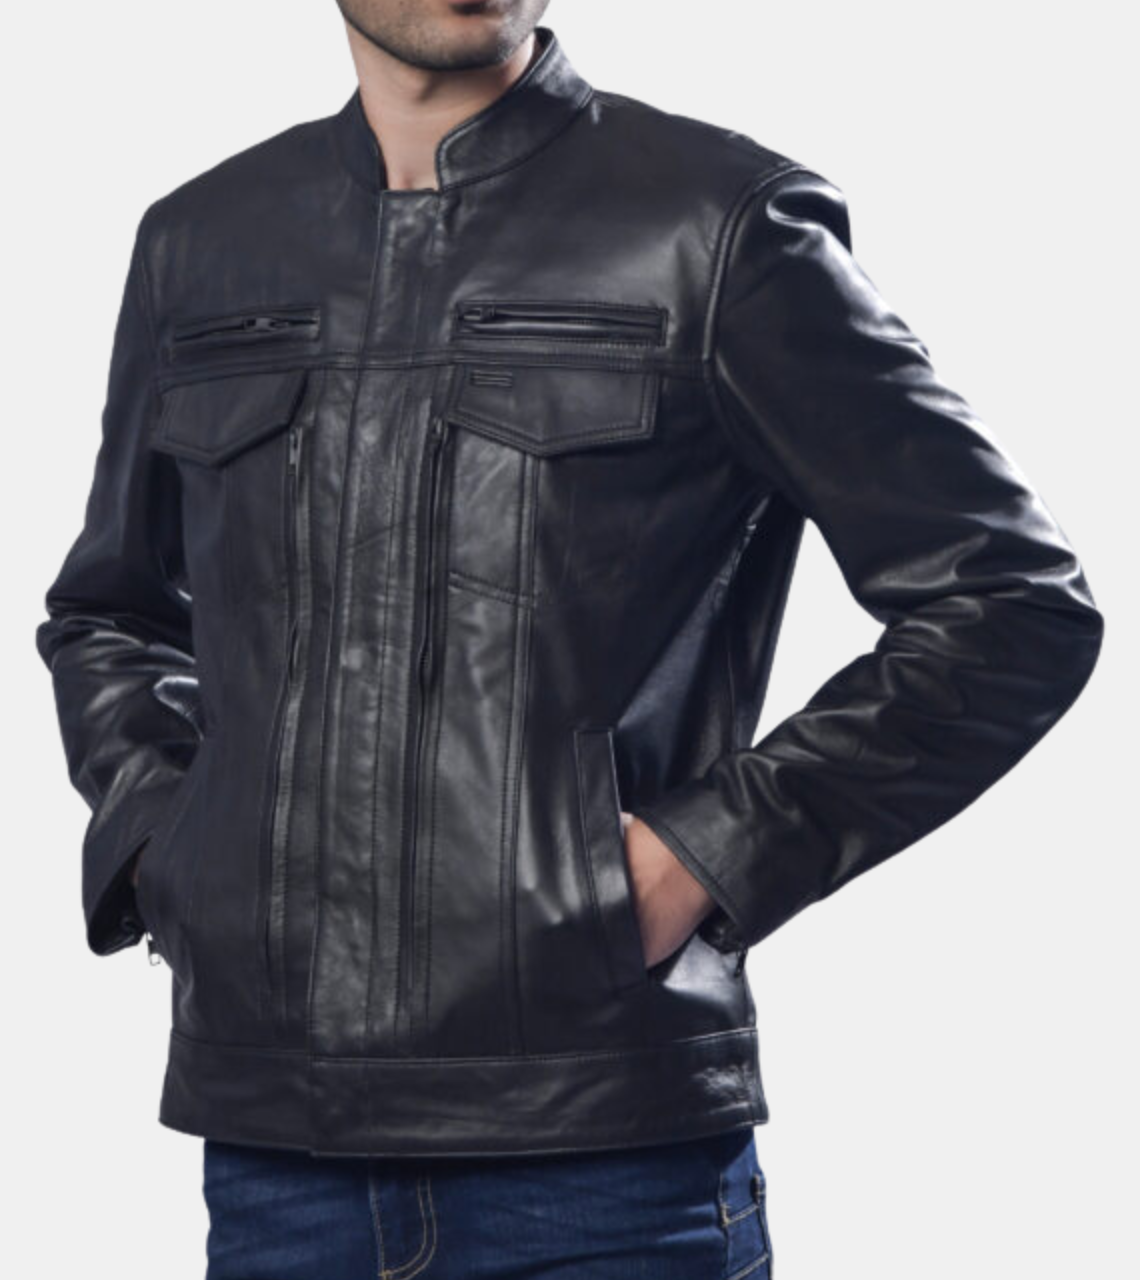 Dempsy Men's Black Leather Jacket